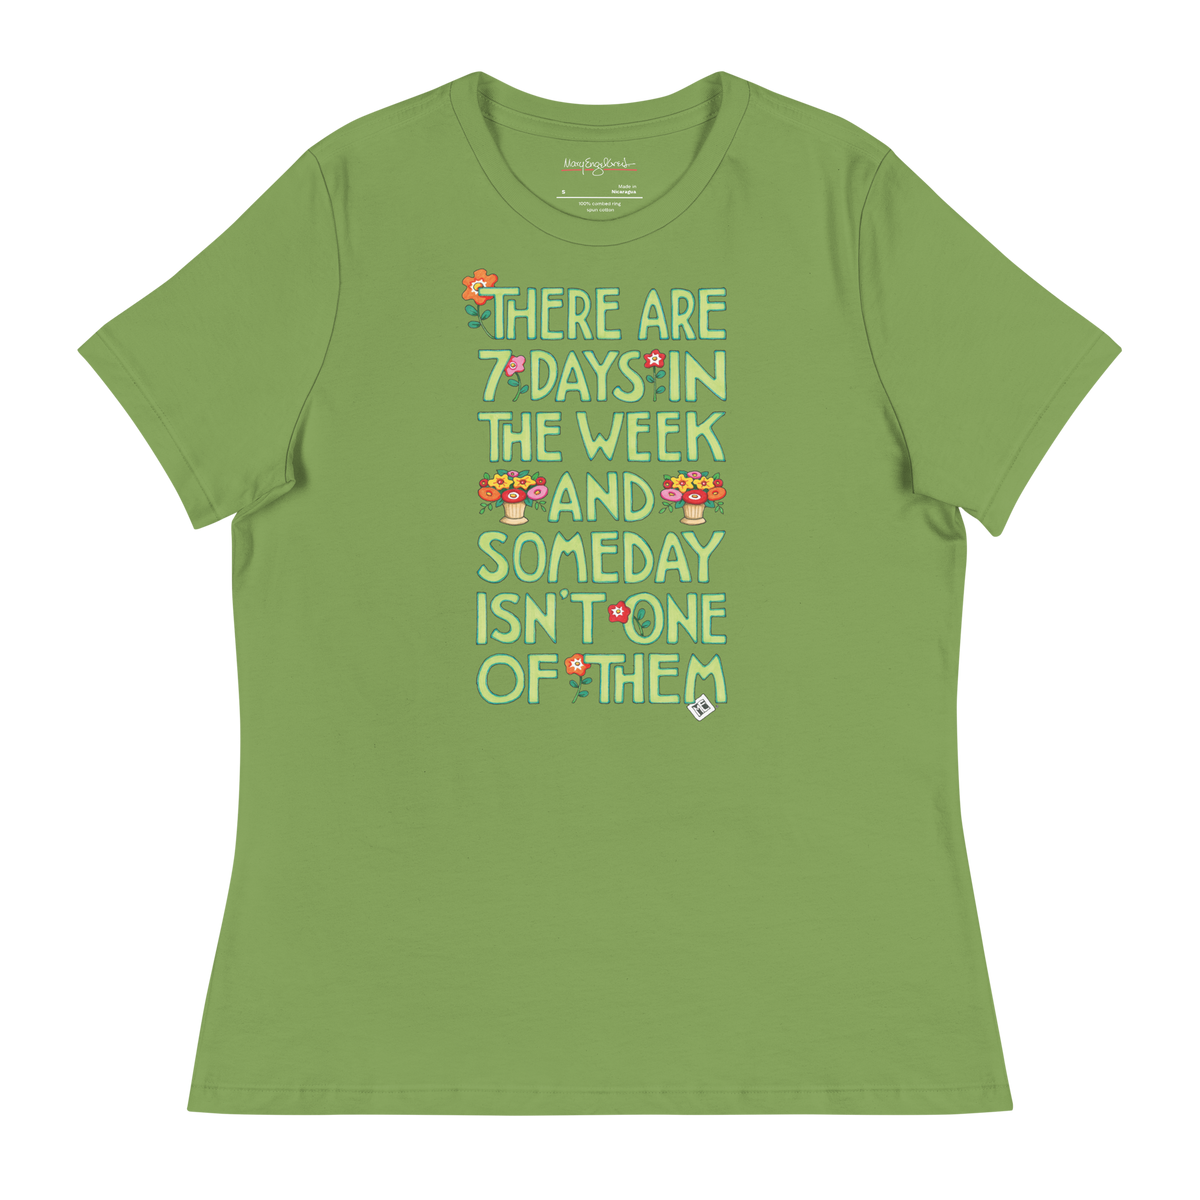 Someday Women's T-Shirt